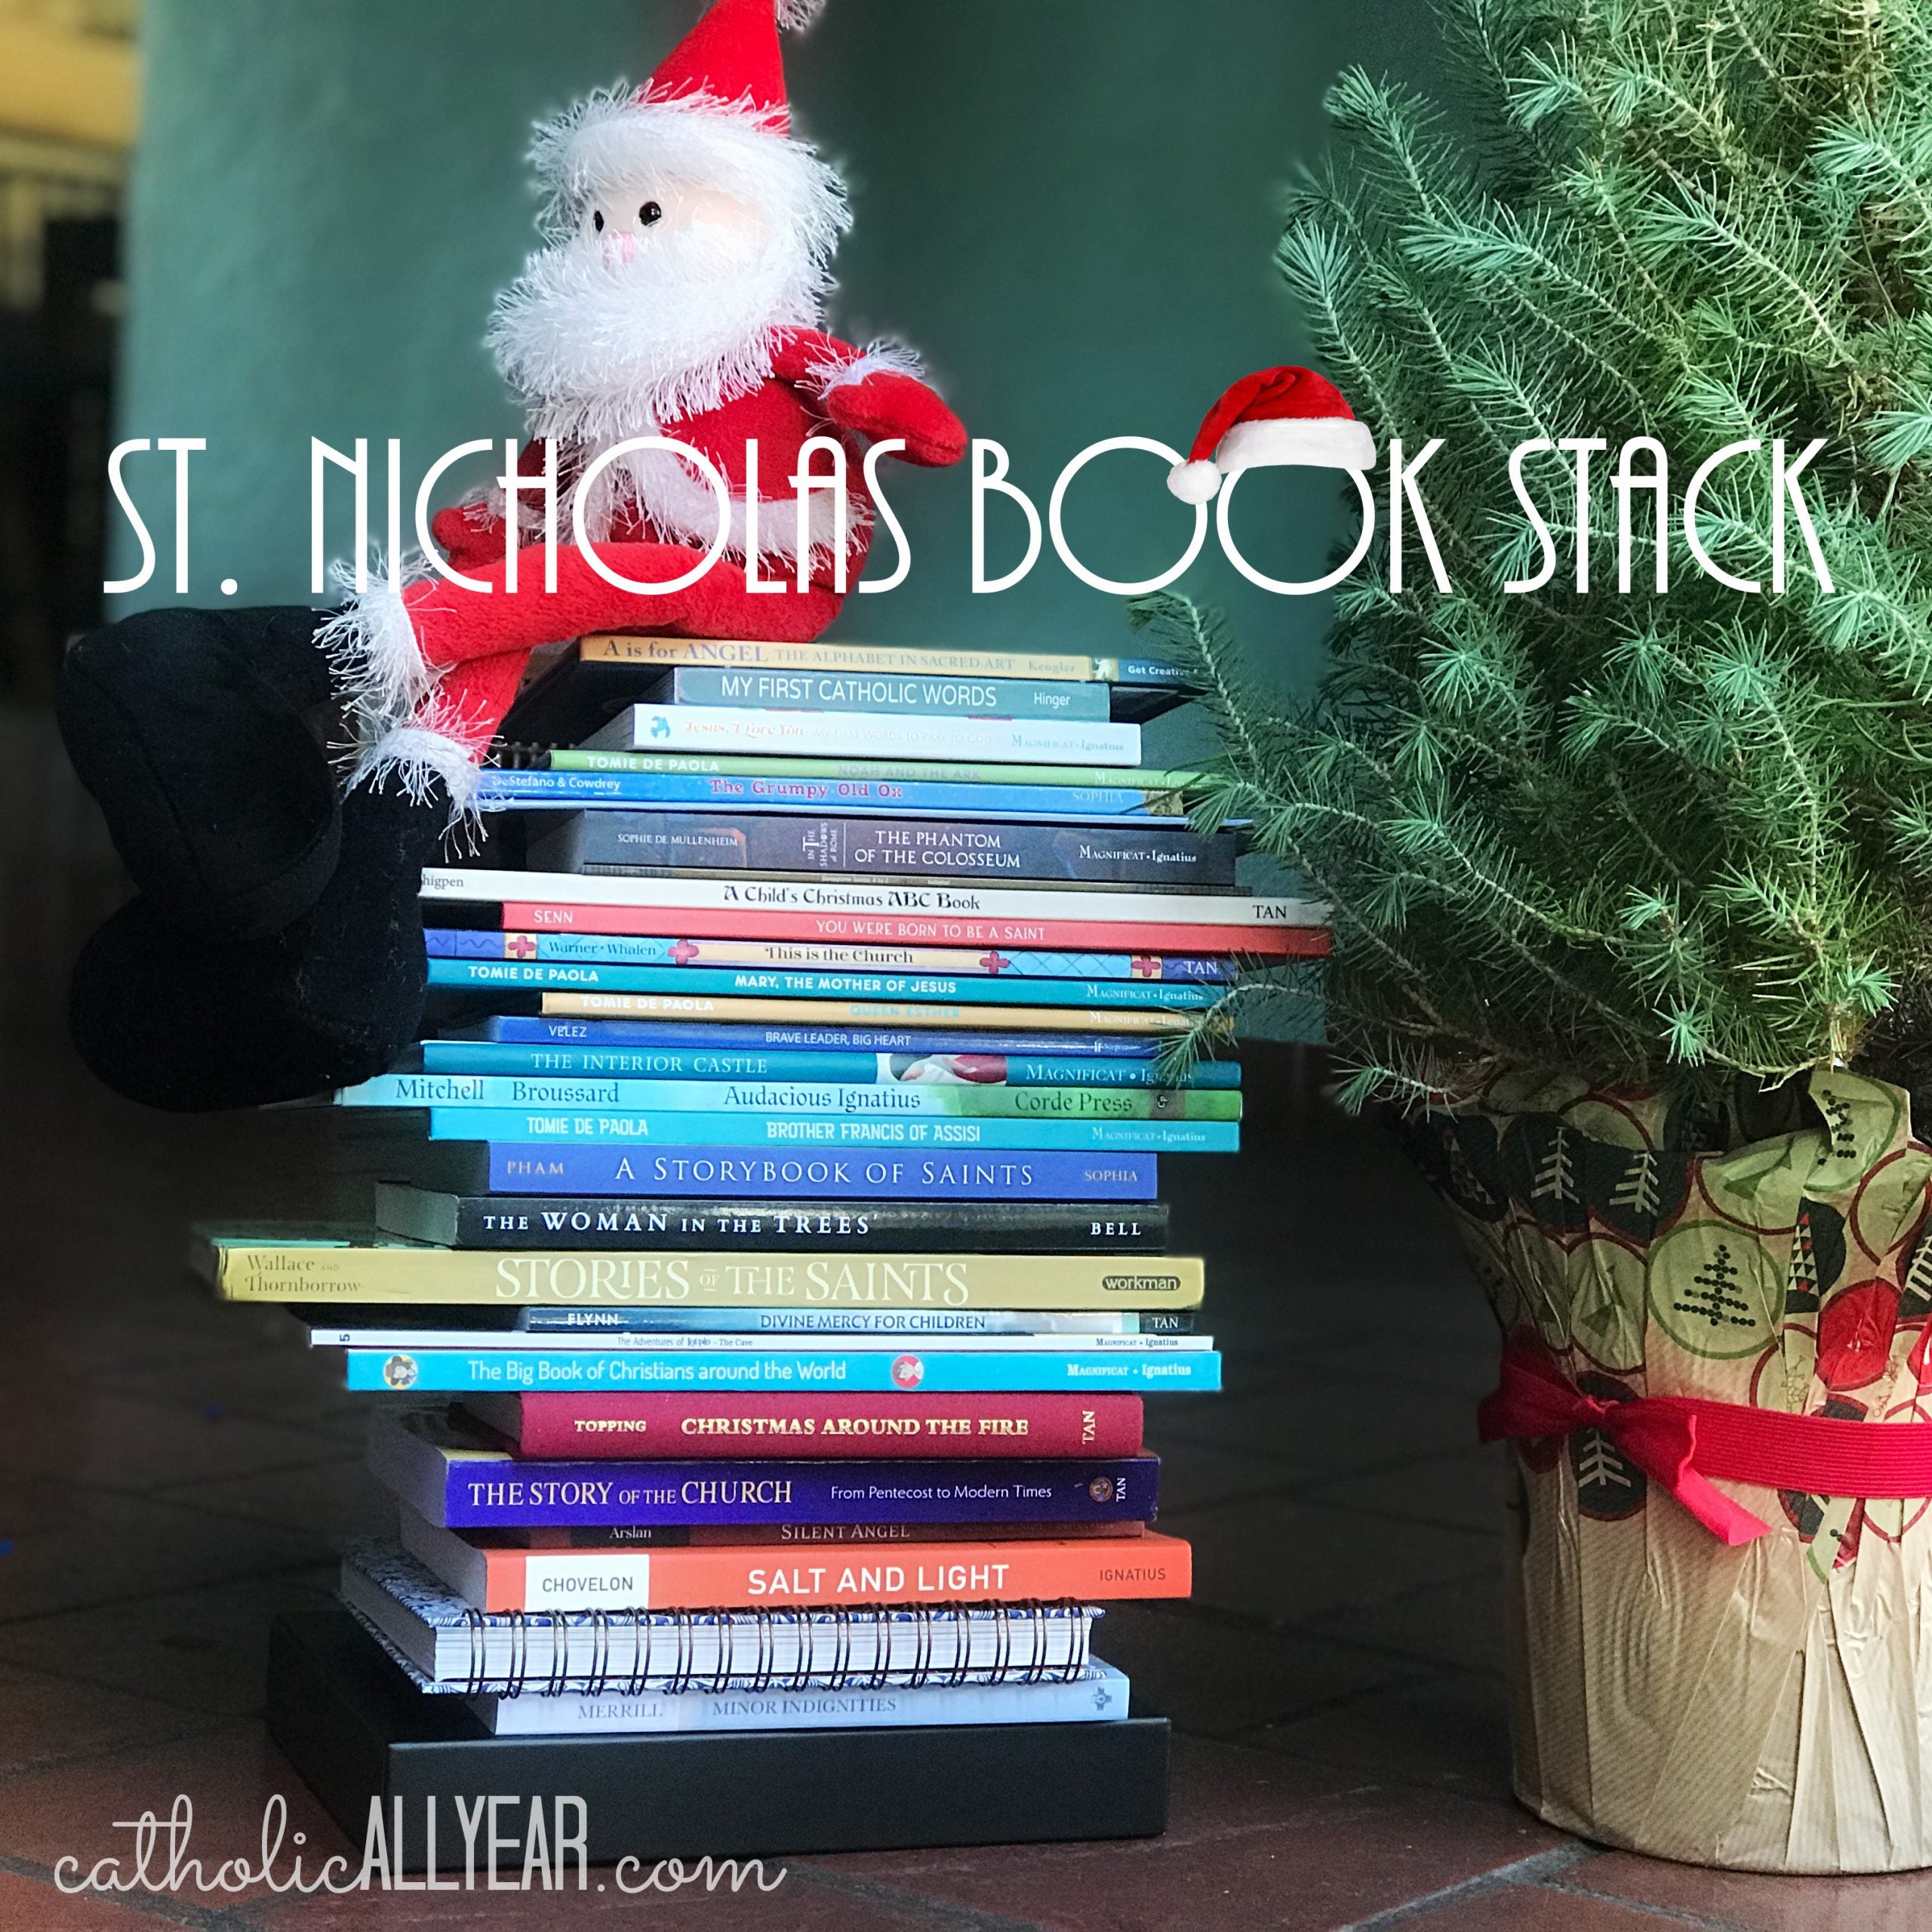 St. Nicholas Catholic Book Stack